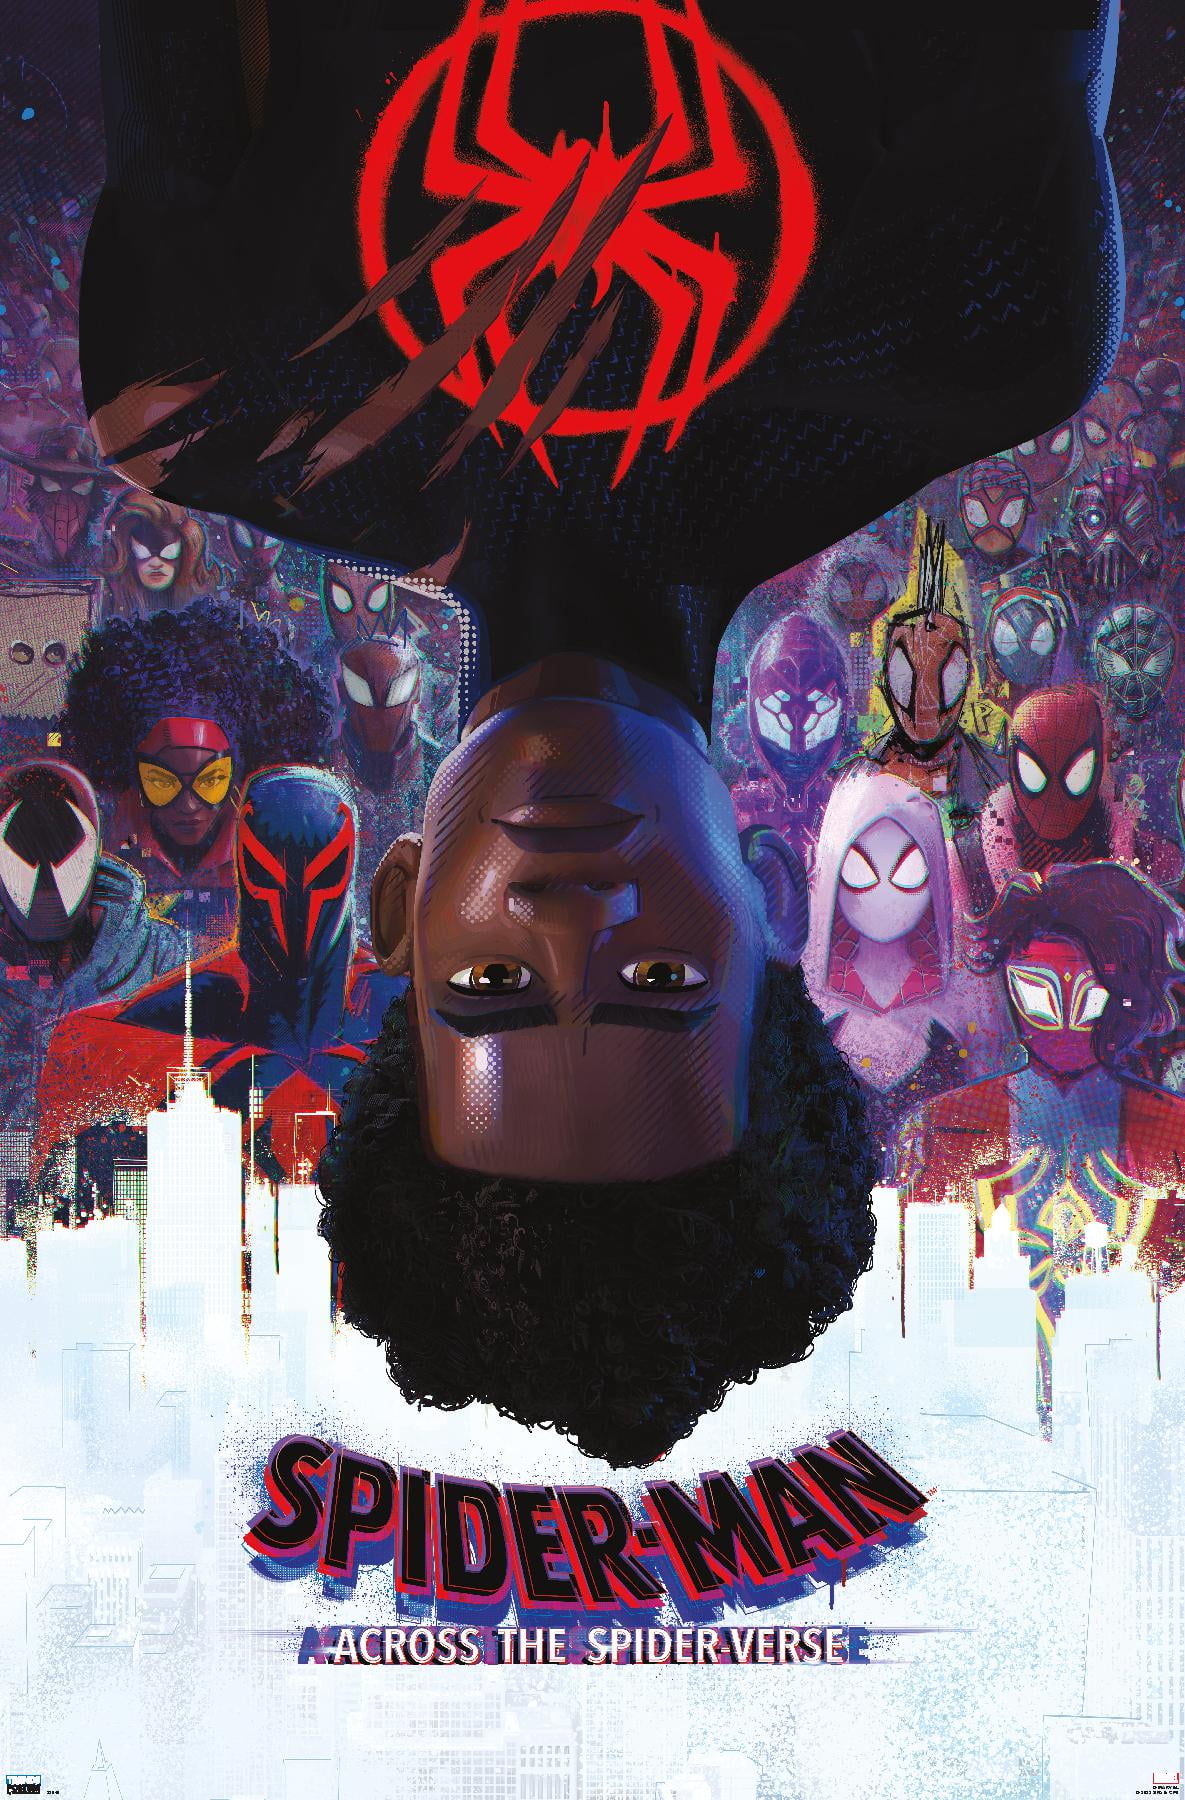 Spiderman across the spider verse poster by artoflegion56 on